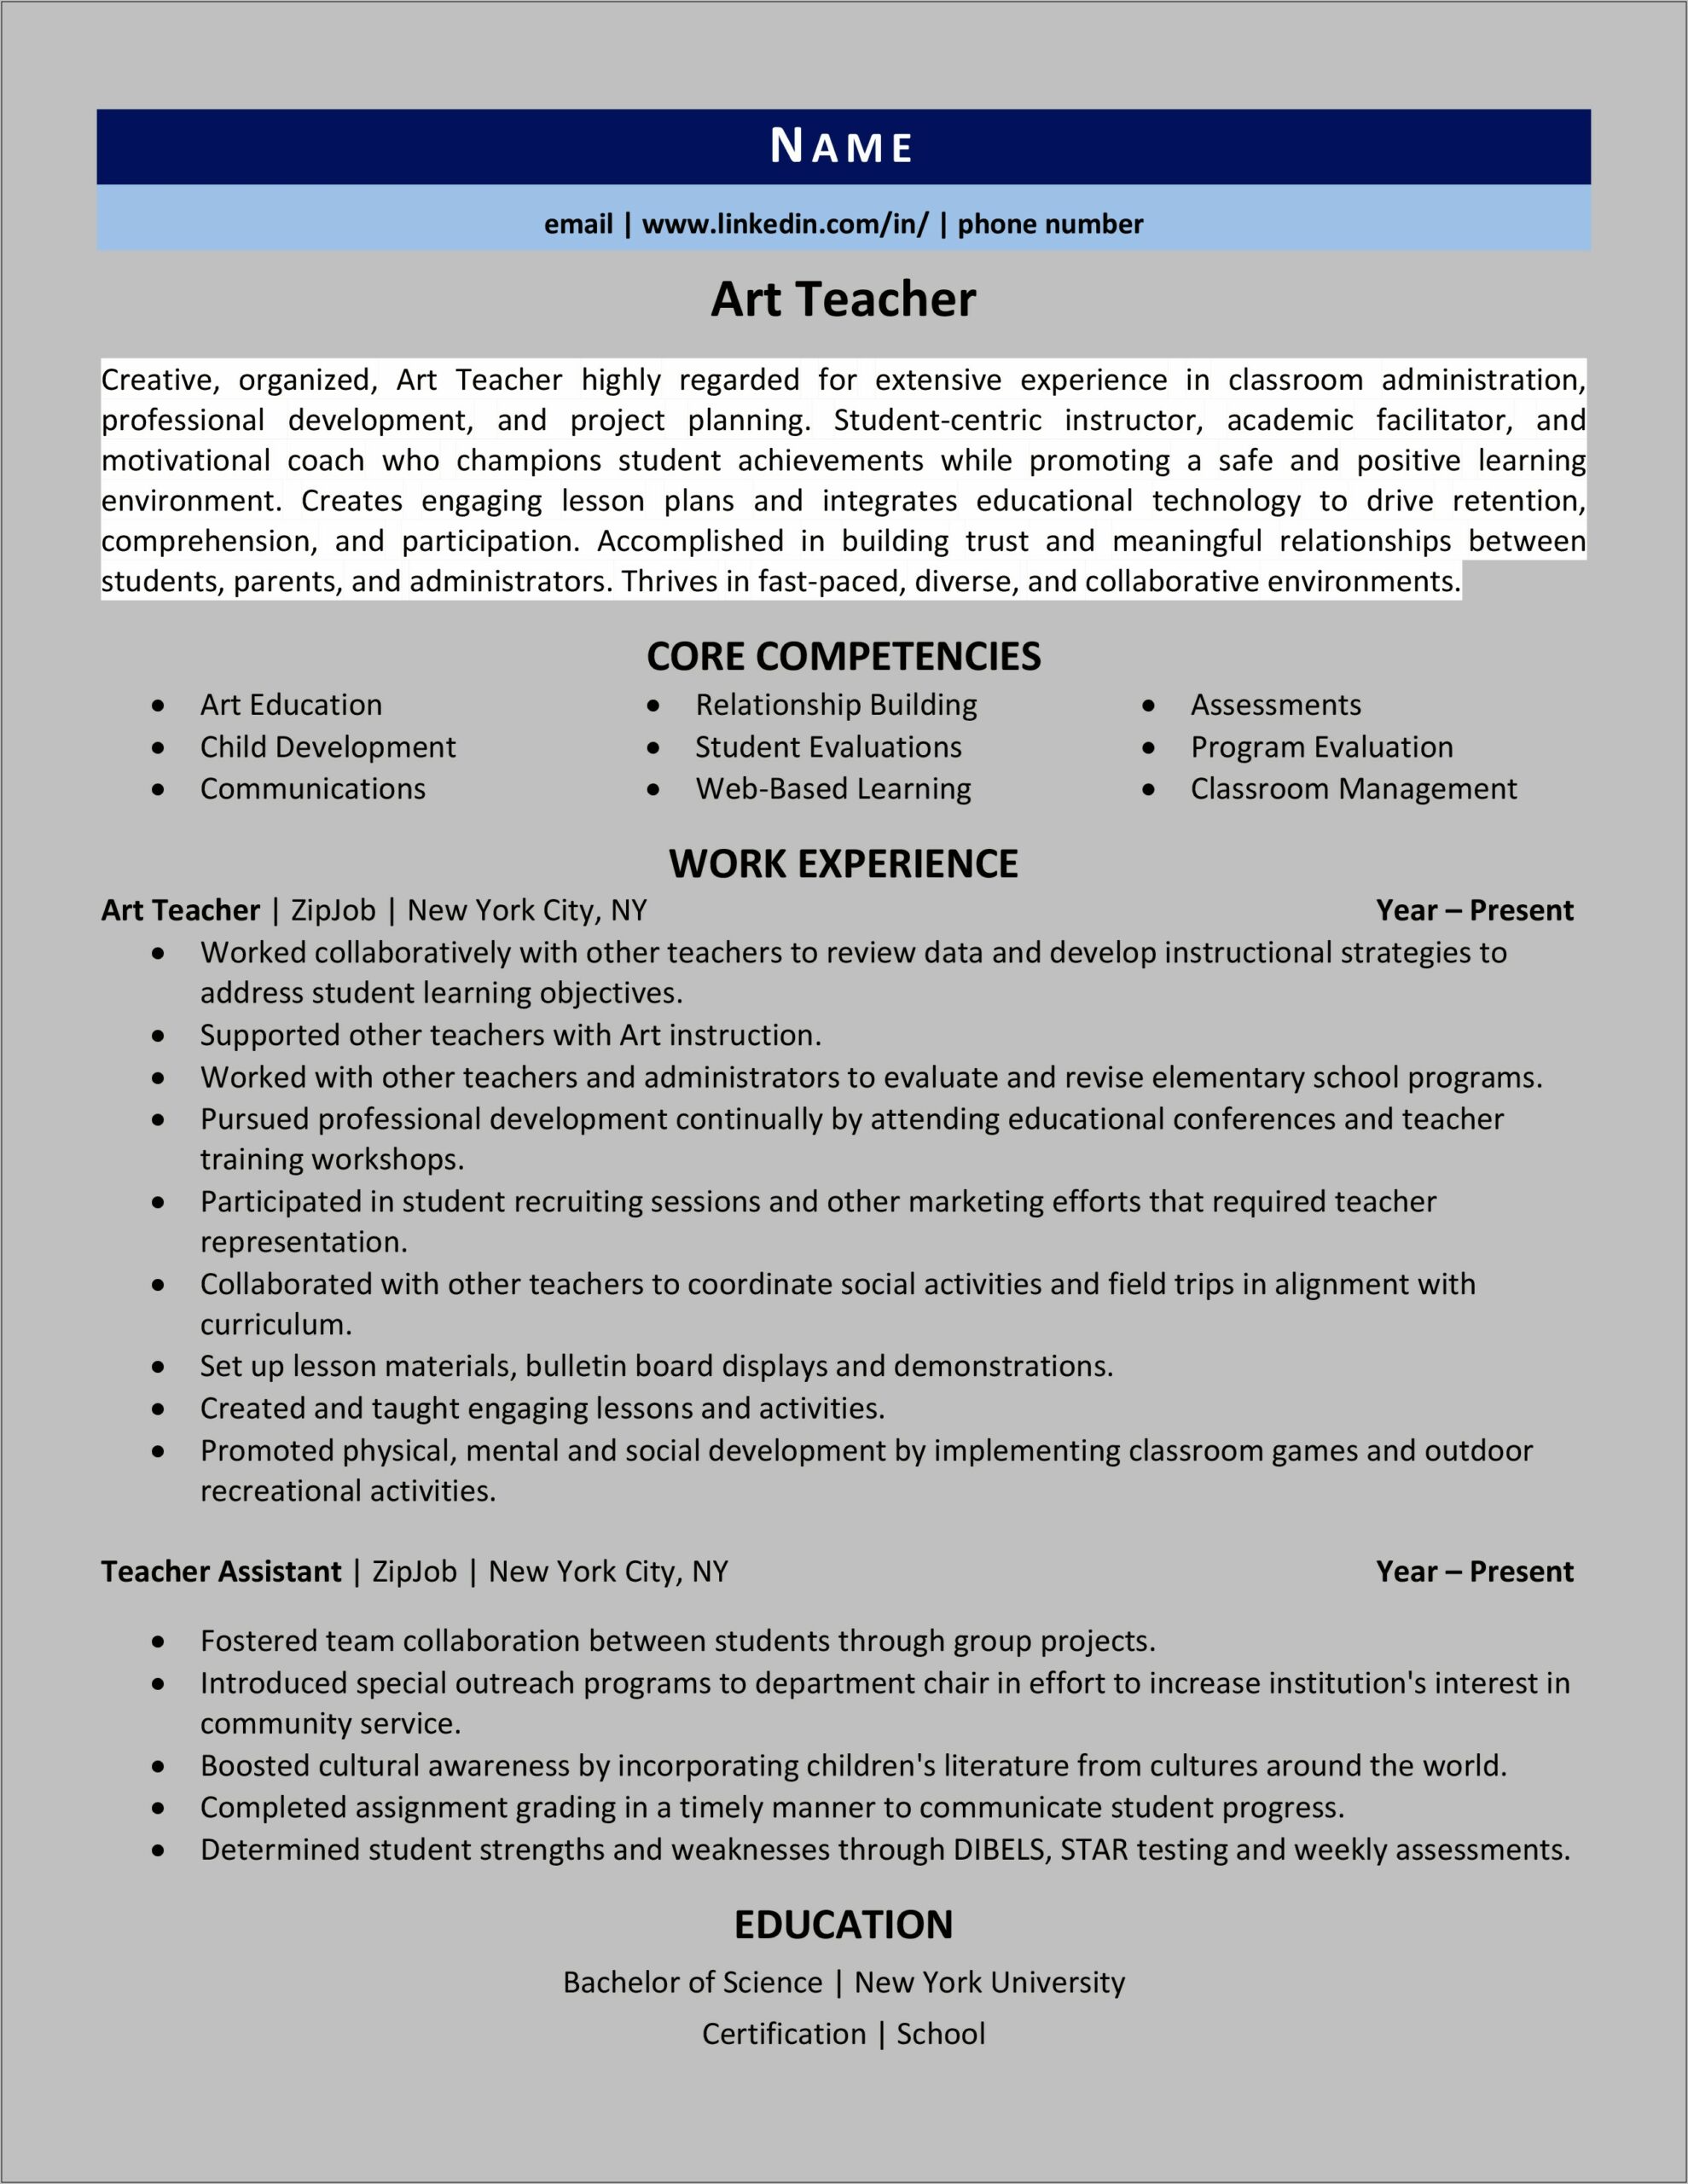 Art Teacher Resume Objective Examples